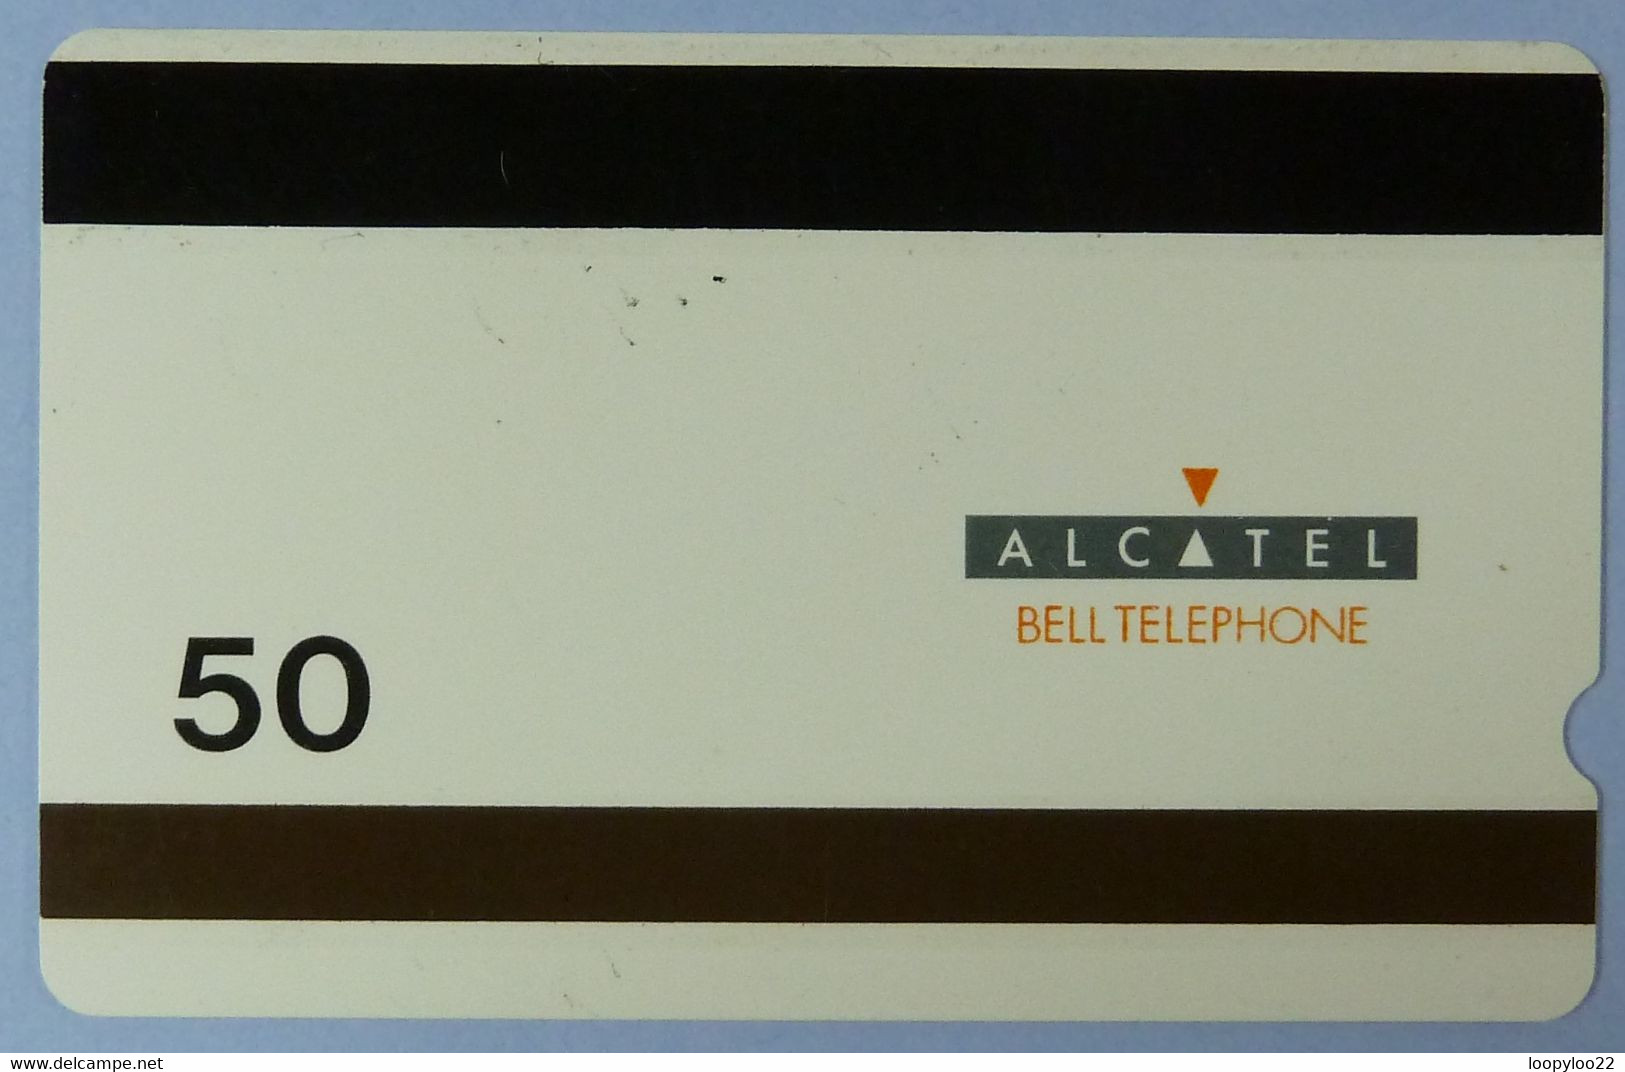 BELGIUM / POLAND- Alcatel - Credifaxphone (Man) - Magnetic - Field Trial / Test - 50 - Bell Telephone - Used - [3] Servicios & Ensayos